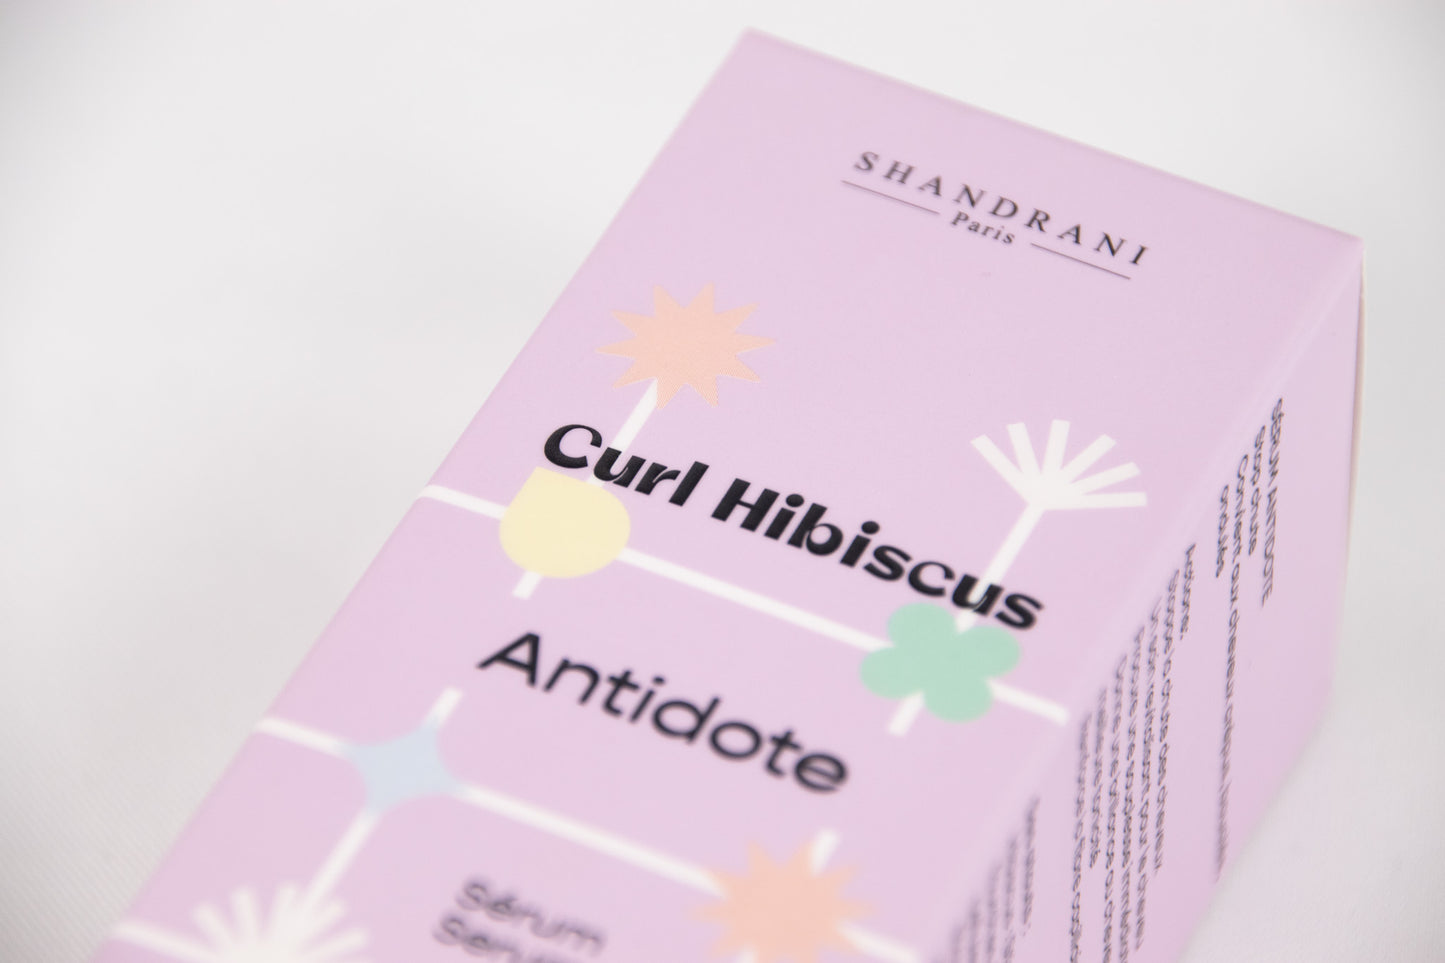 Curl Hibiscus - Antidote Anti-chute